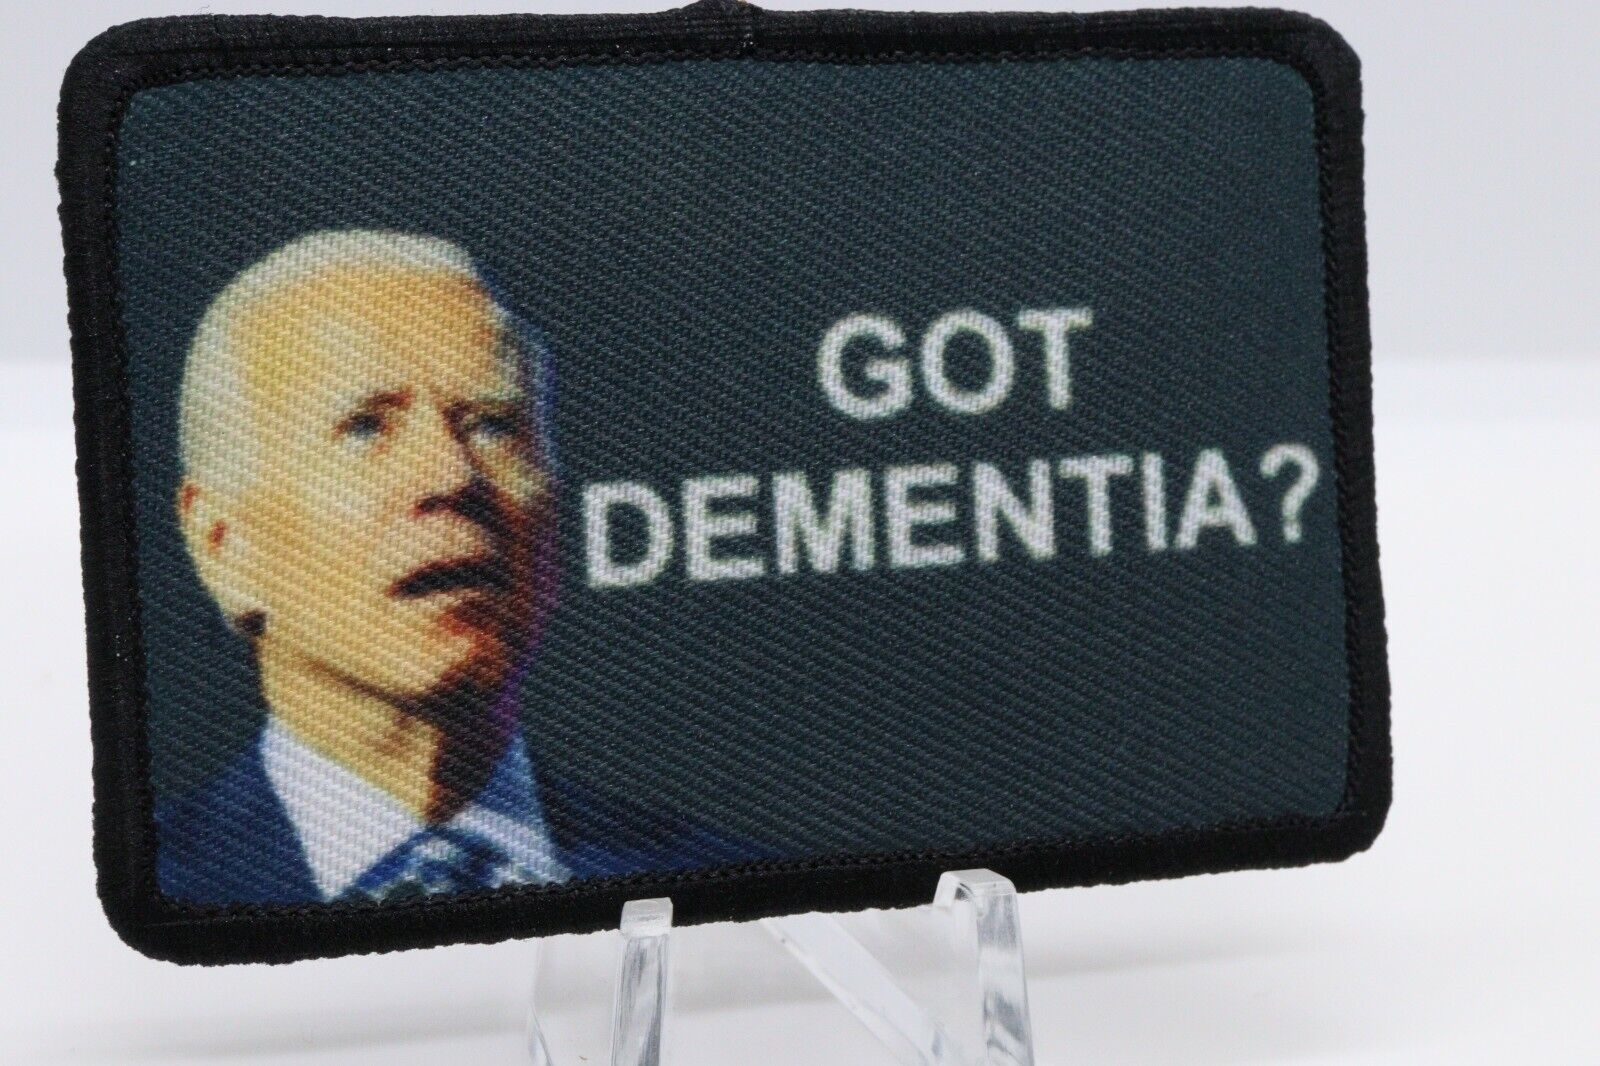 Biden Got Dementia? politics patch 2\